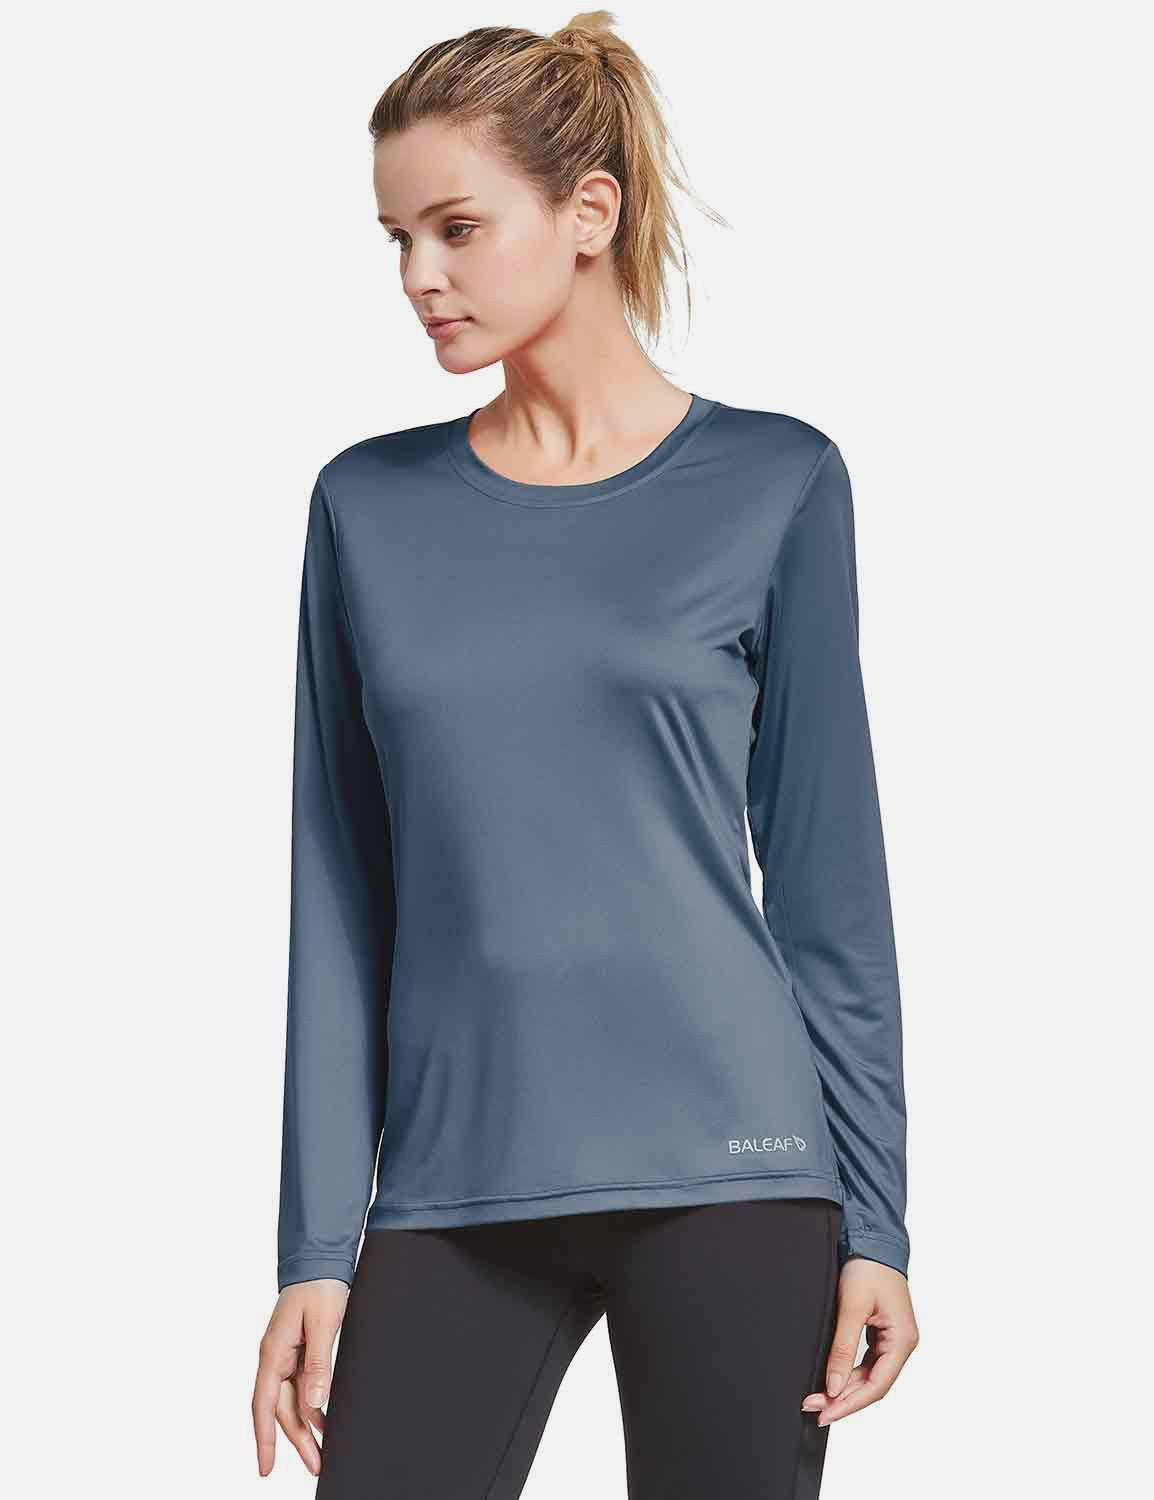 BALEAF Women's Loose Fit Tagless Workout Long Sleeved Shirt abd294 Gray Front